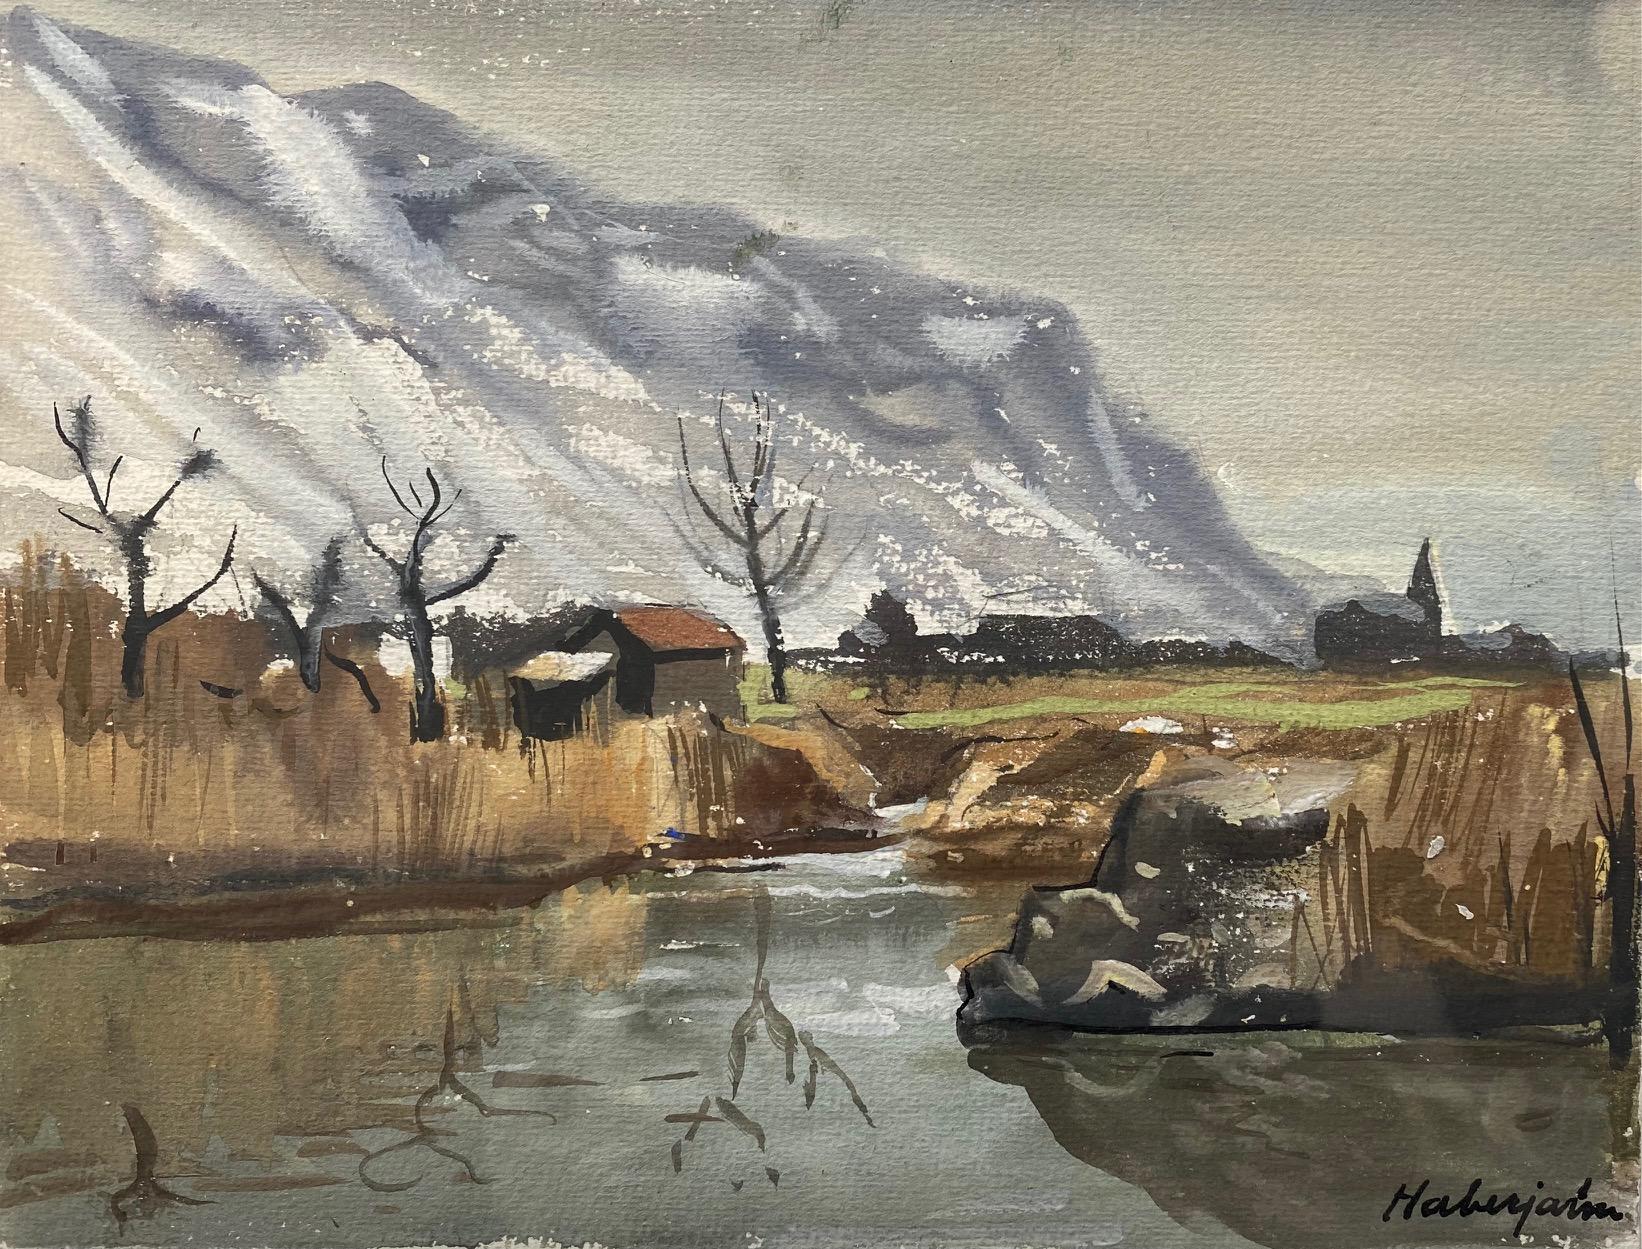 Gabriel Eduard Haberjahn Landscape Painting - River and snowy mountains by G. E. Haberjahn - Watercolor on paper 16x21 cm